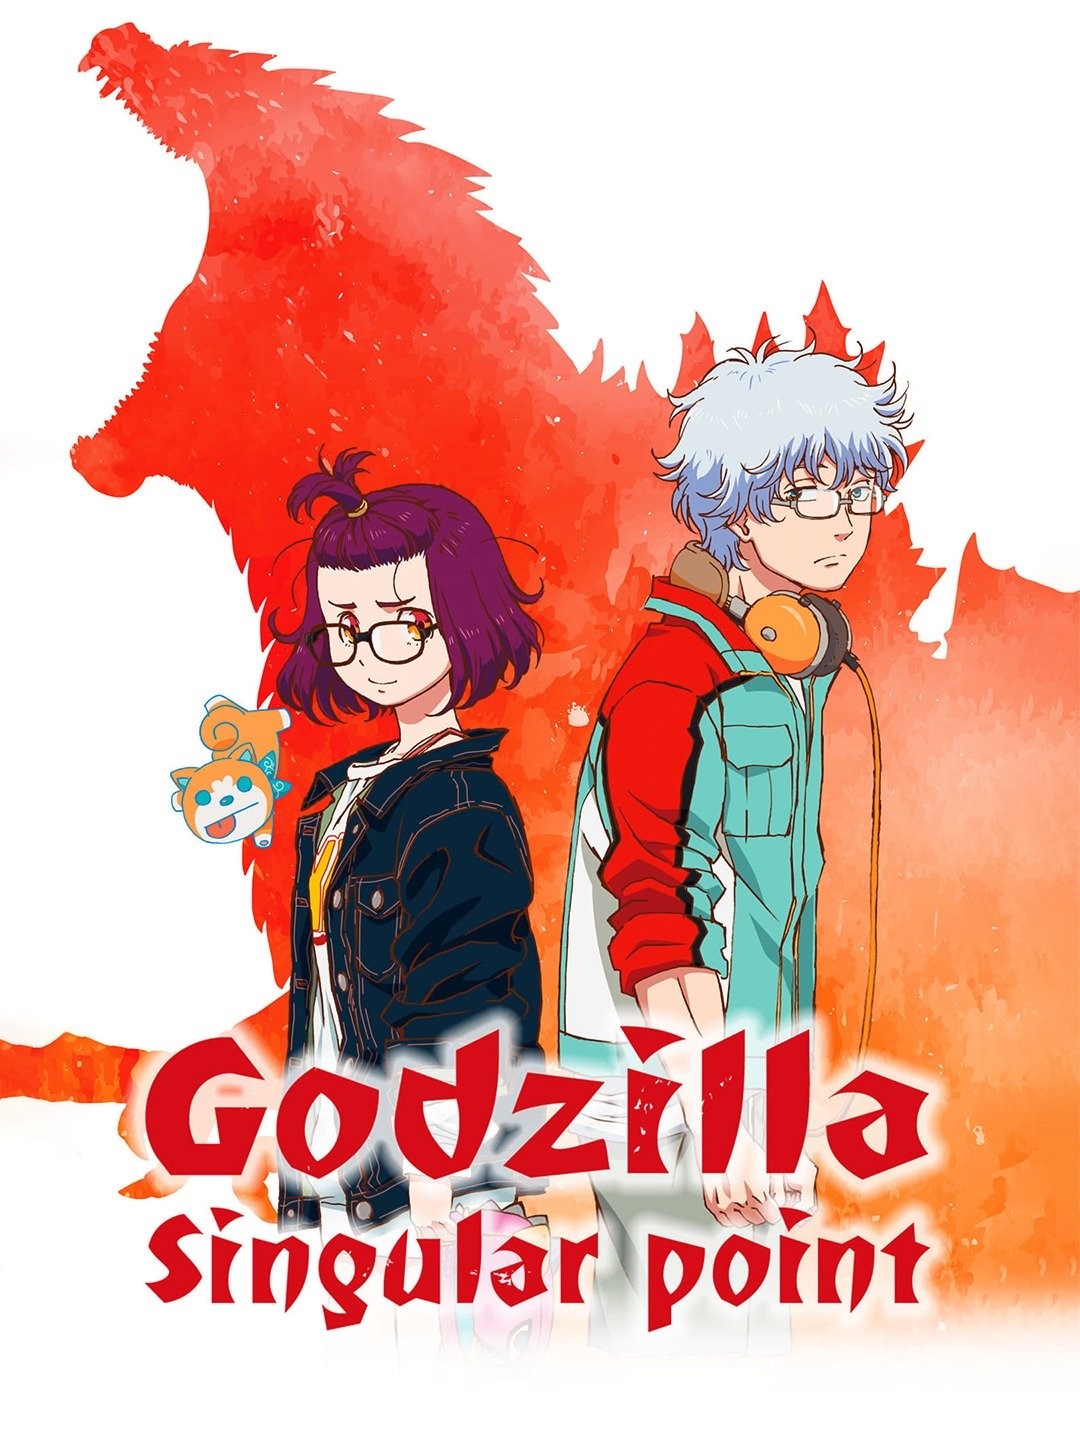 3rdFinal Godzilla Anime Film Trailer Features Godzilla vs Ghidorah   ORENDS RANGE TEMP